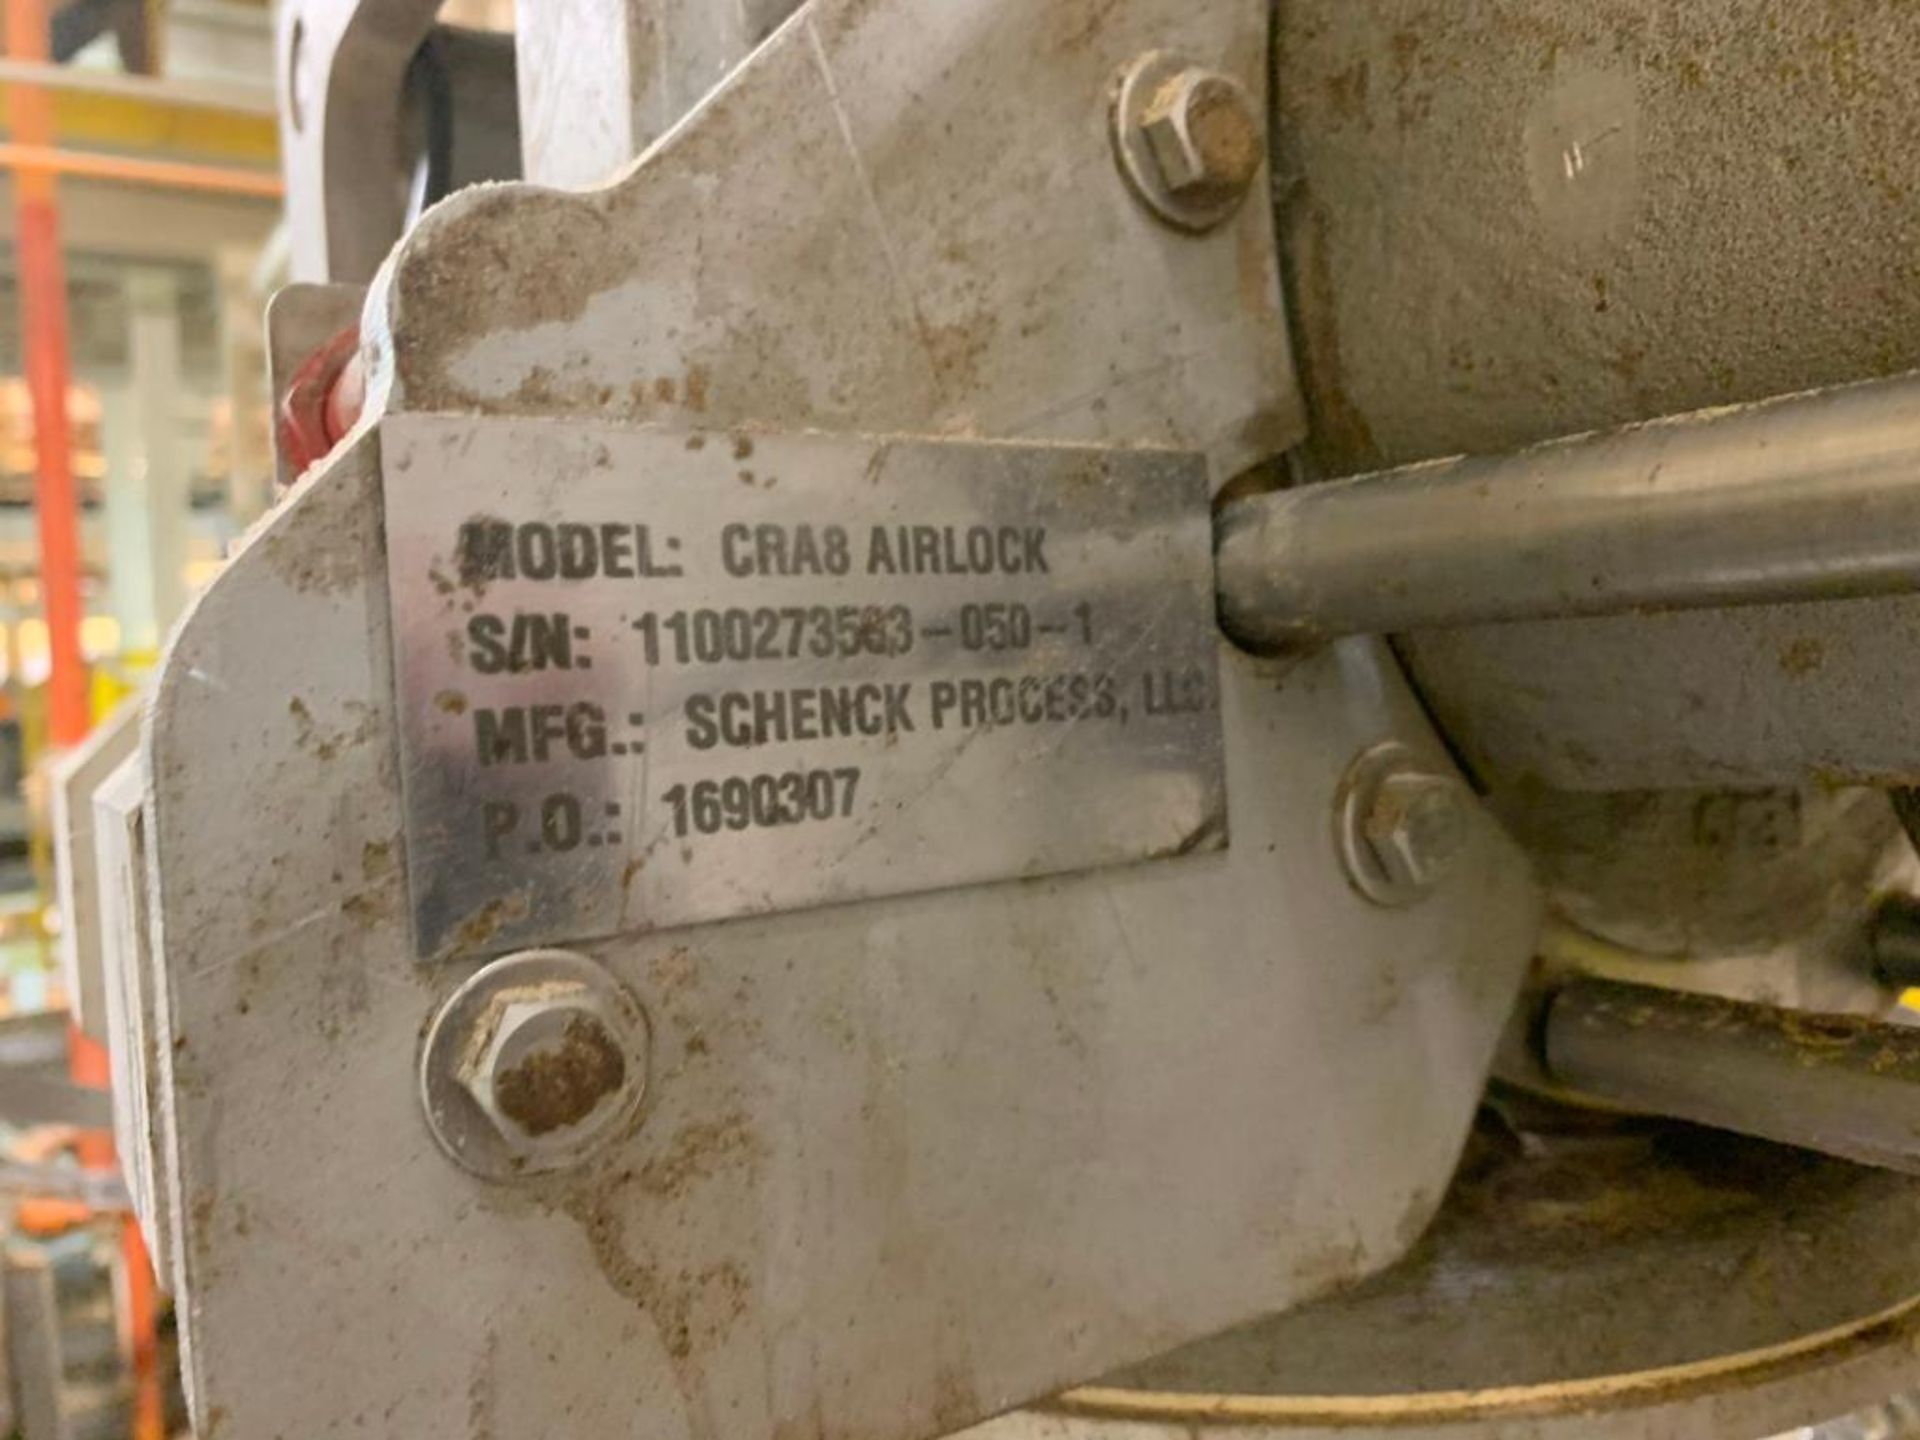 Schenck stainless steel rotary lock, model CRA8 AIRLOCK (small) - Image 2 of 5